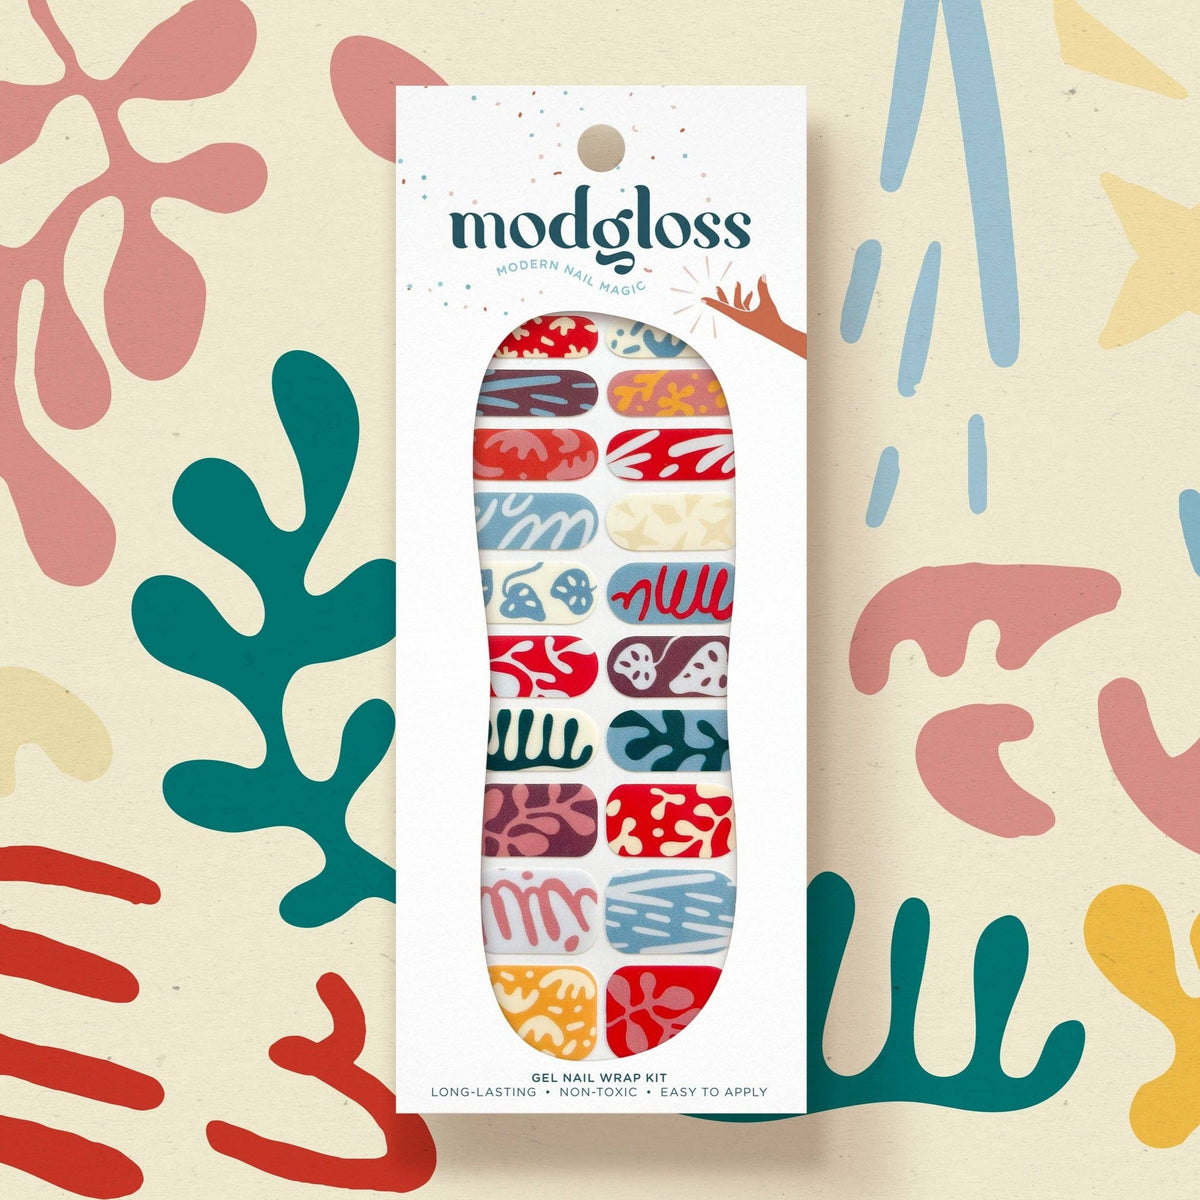 Modgloss - &#39;Gallery Gala&#39; Modern Art Nail Wrap Kit